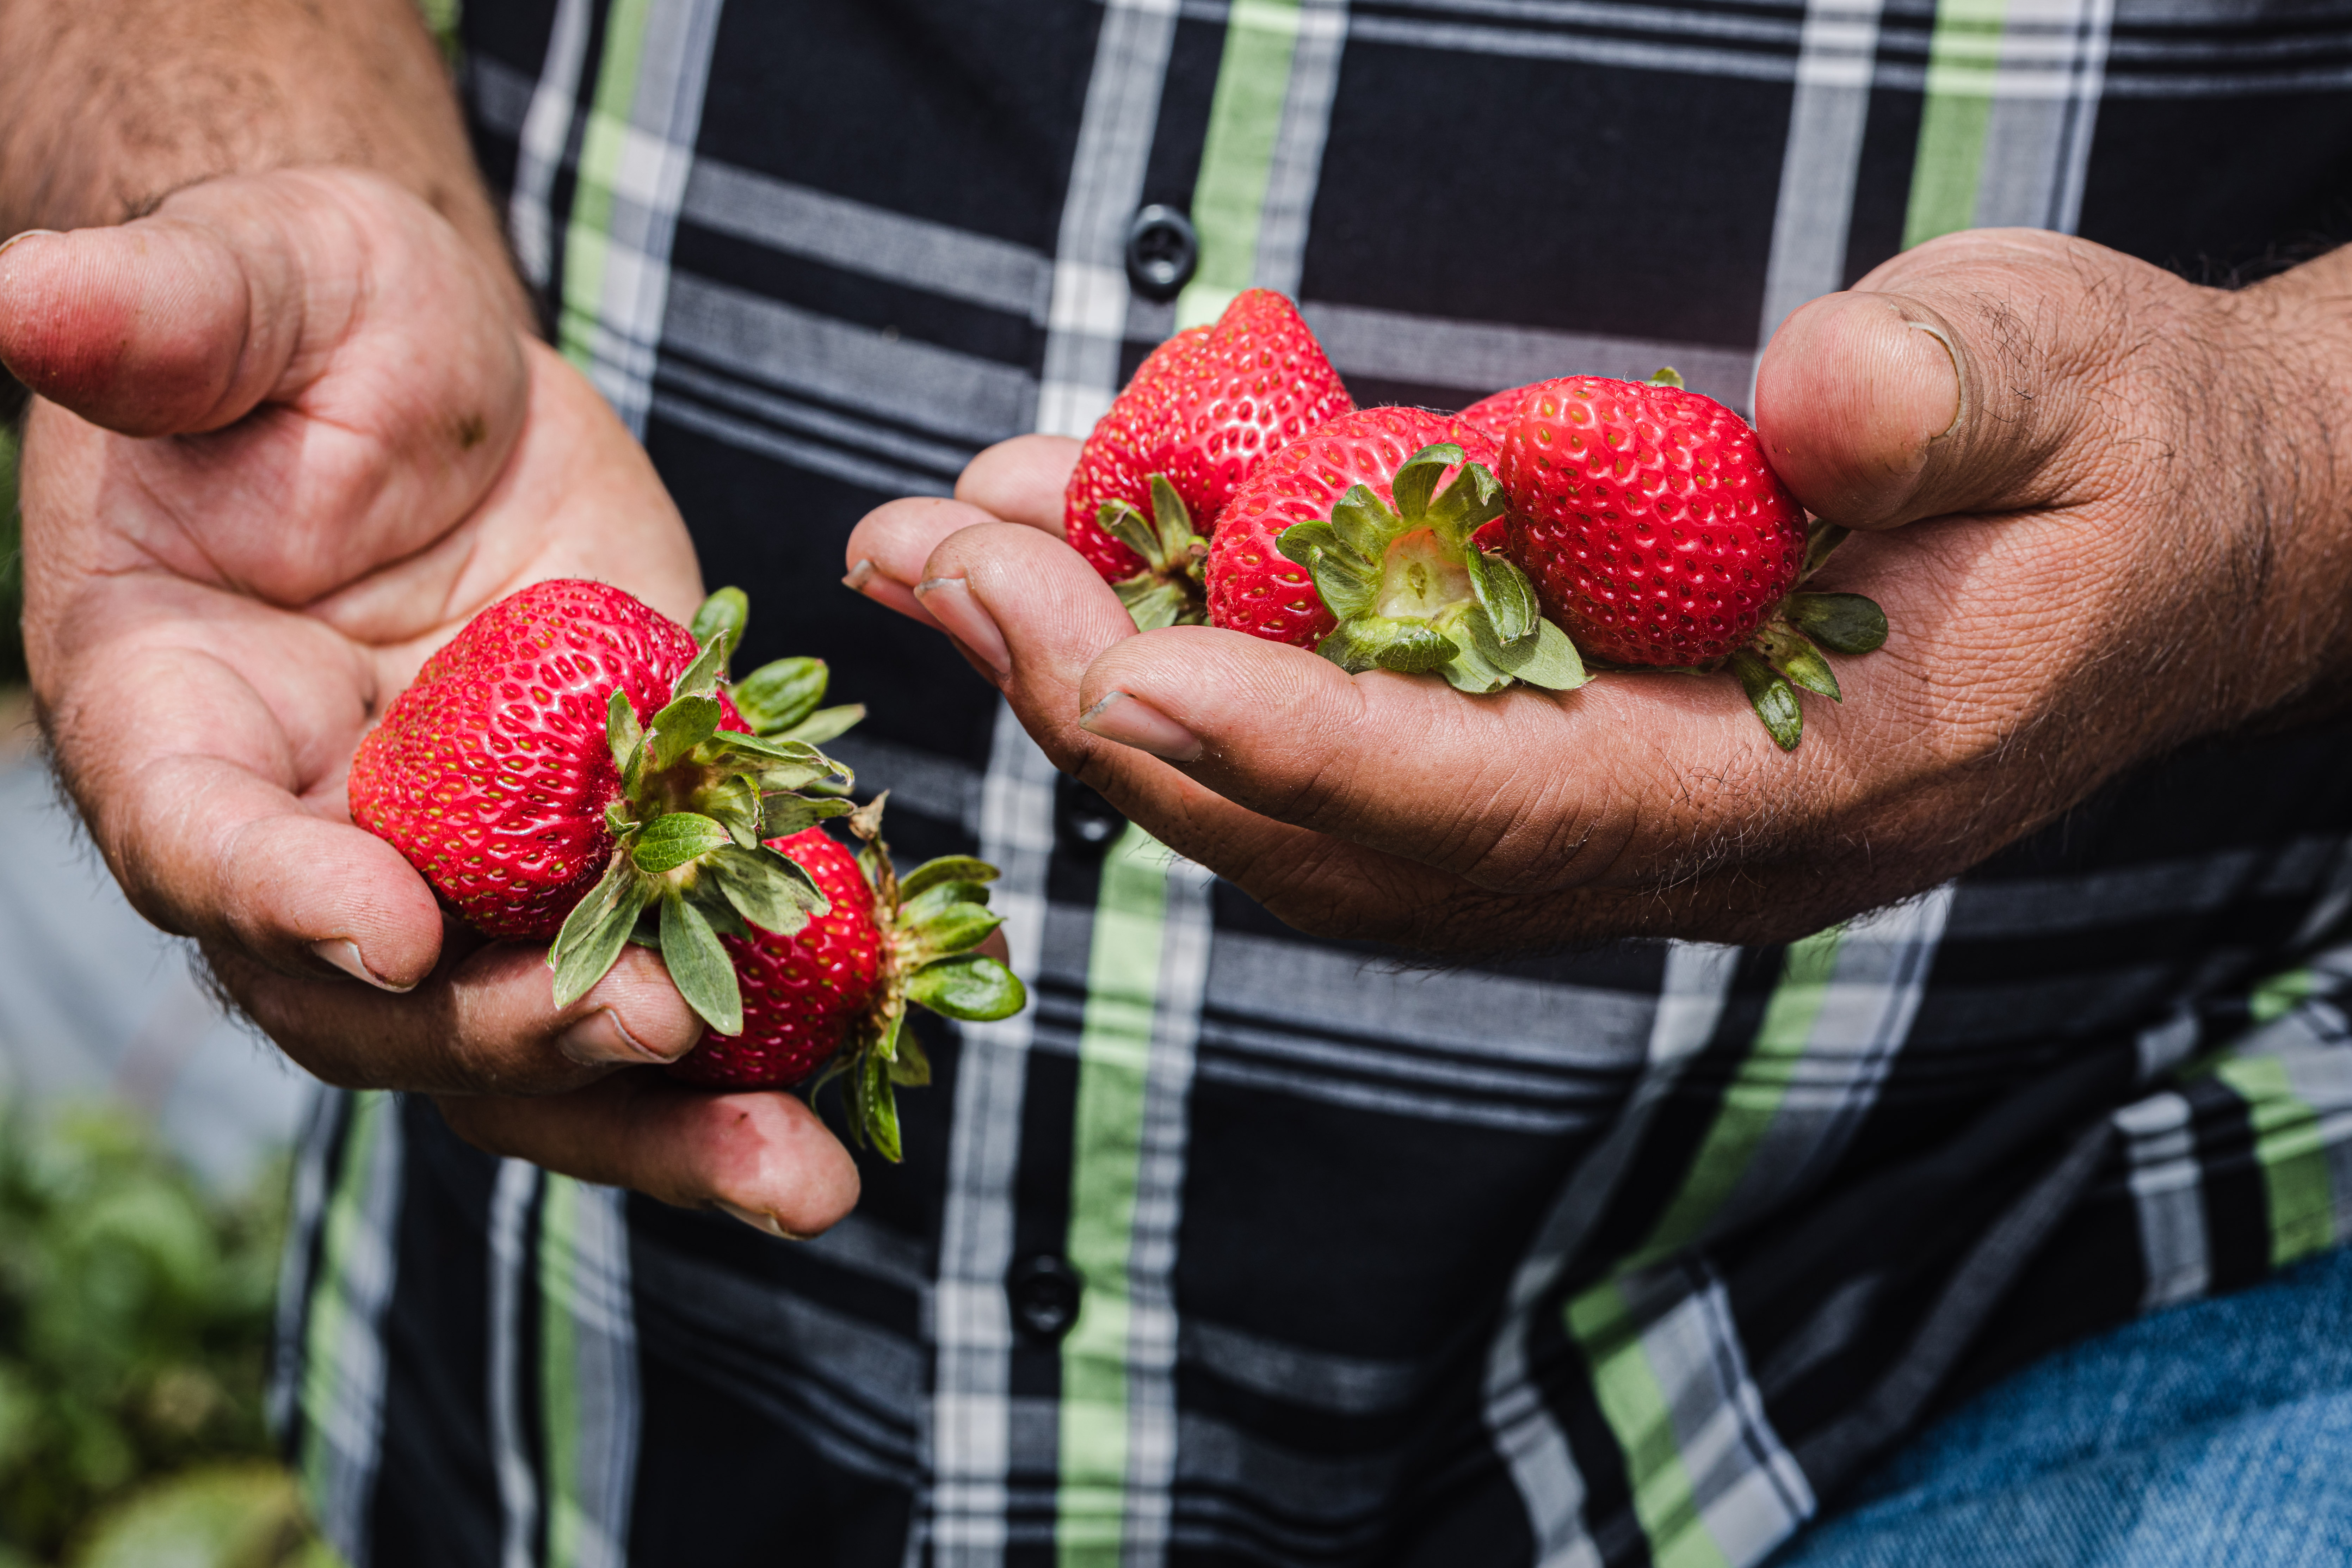 JSM organics founder, Javier Zamora, showing up the summers strawberry bounty.